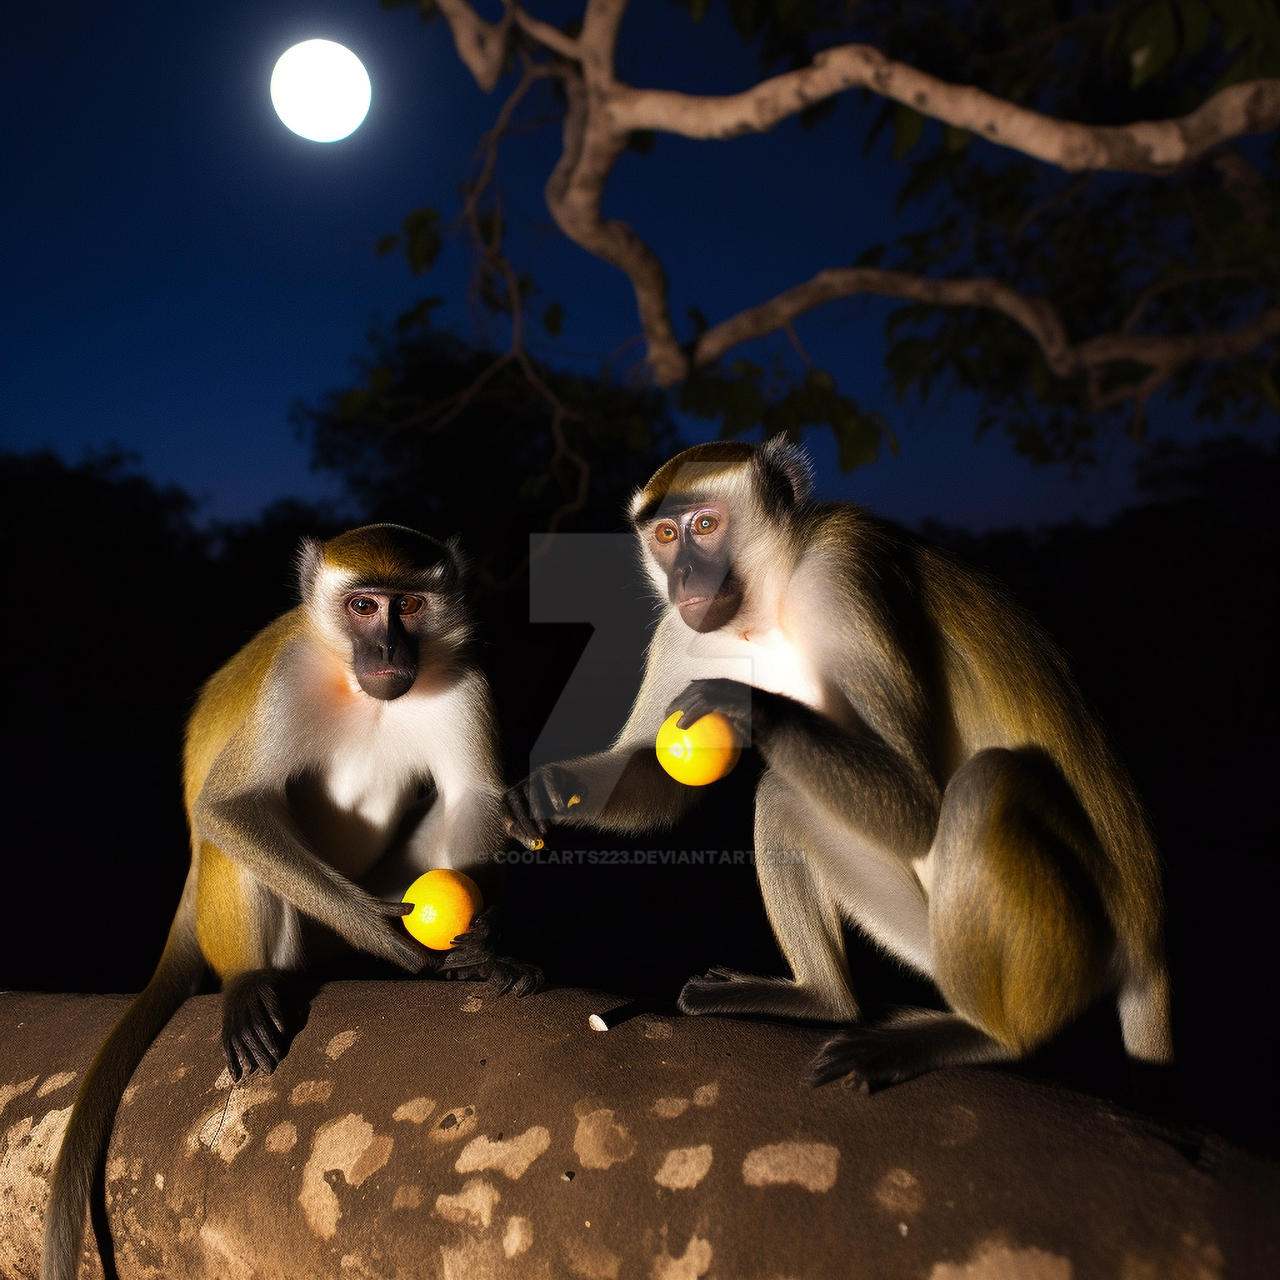 Moonlight daydream theme for monkeytype —